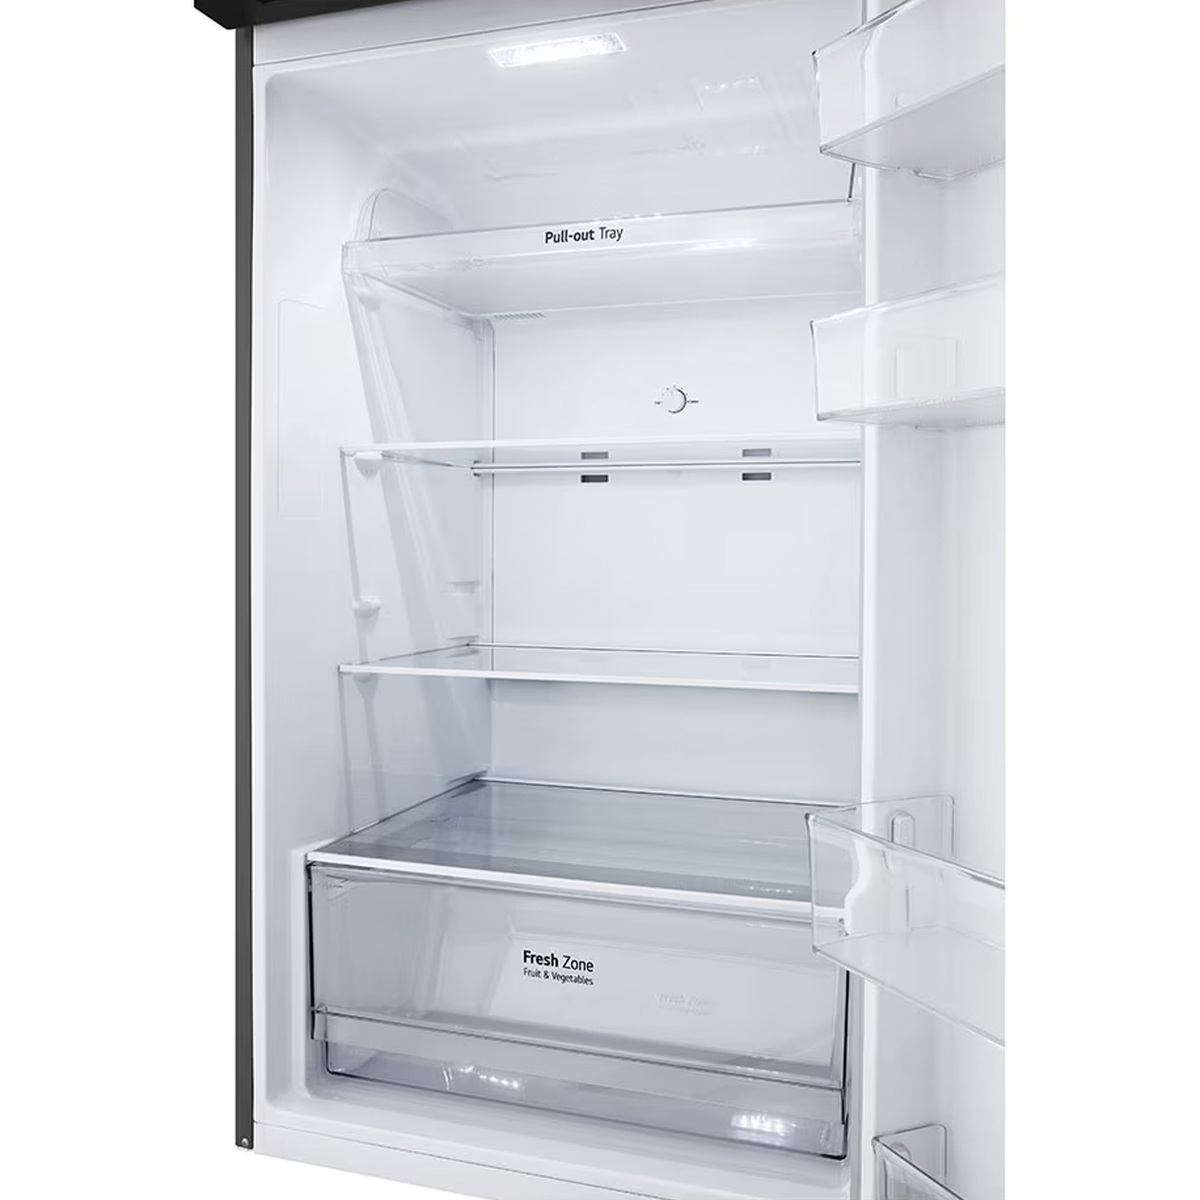 LG Double Door Refrigerator, 375 L, Silver, GN-B472PQMB